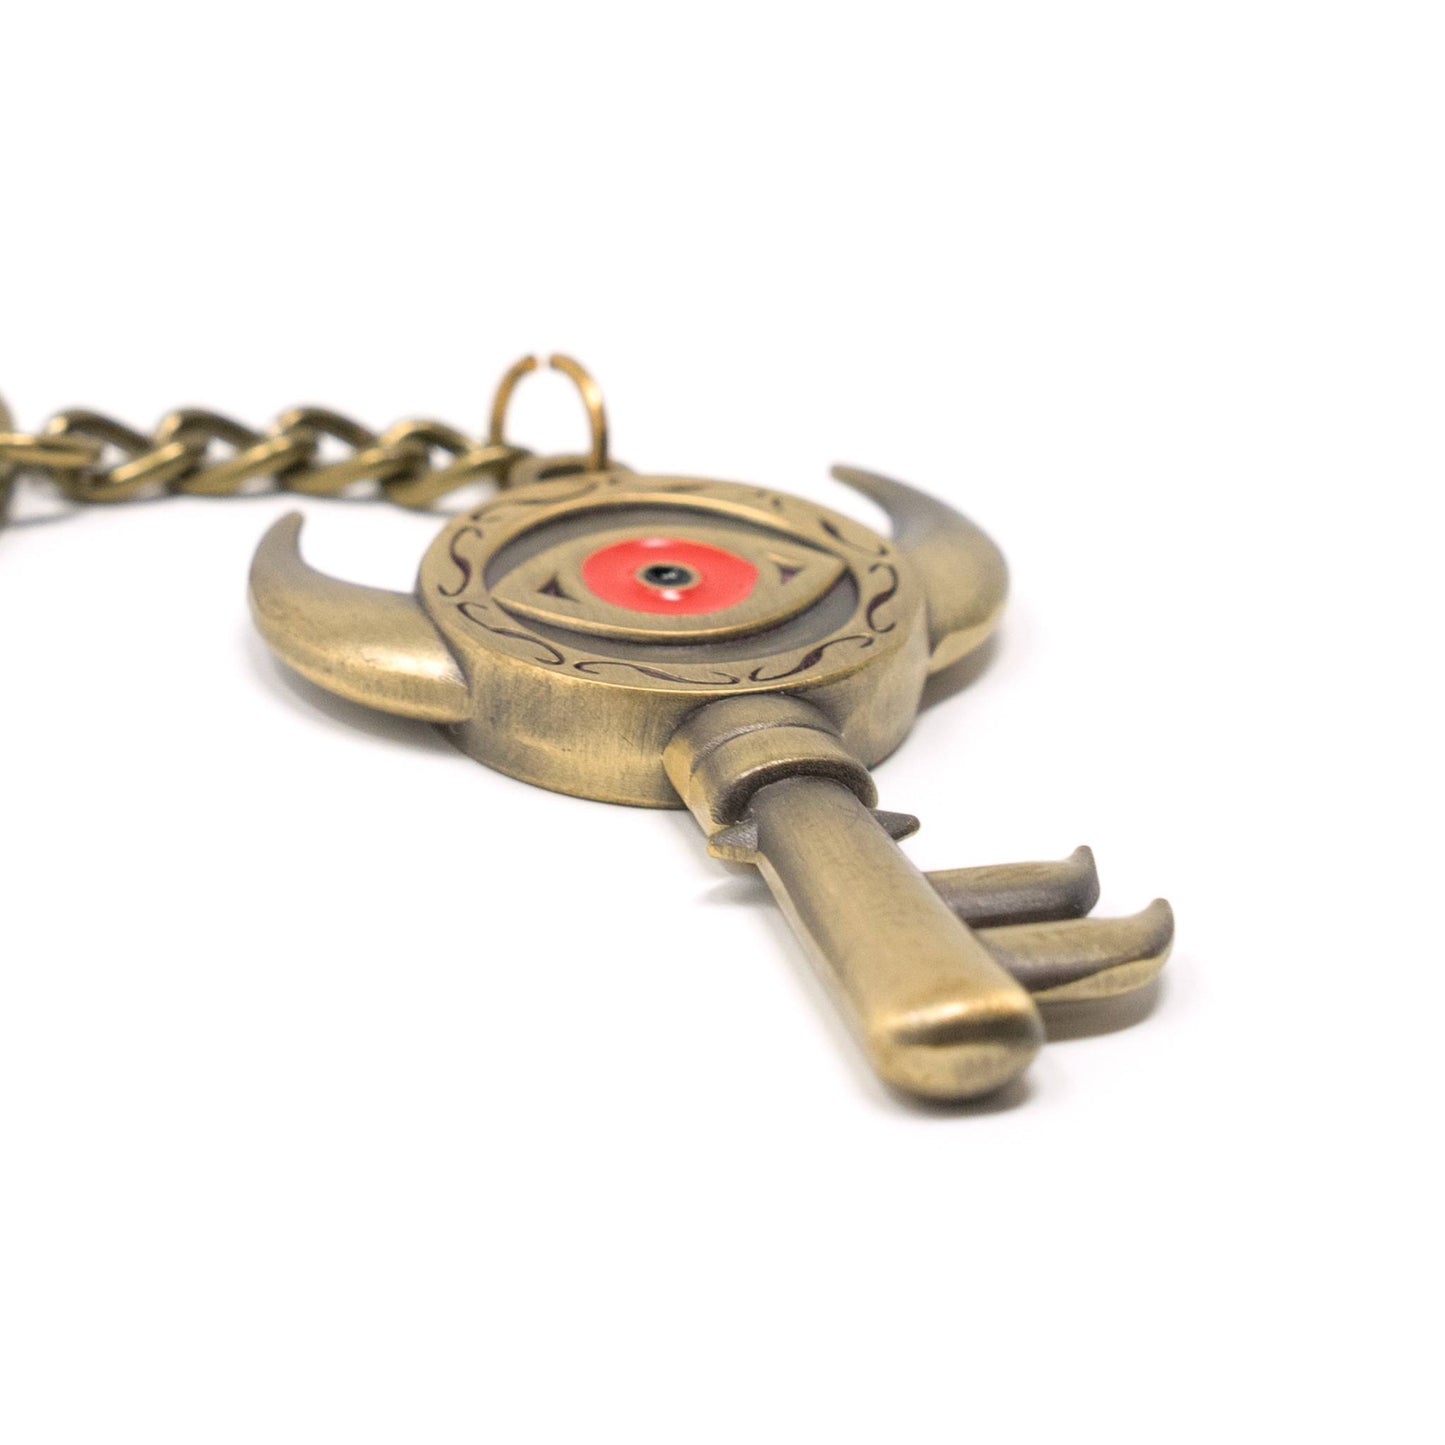 The Boss Key (Keychain)